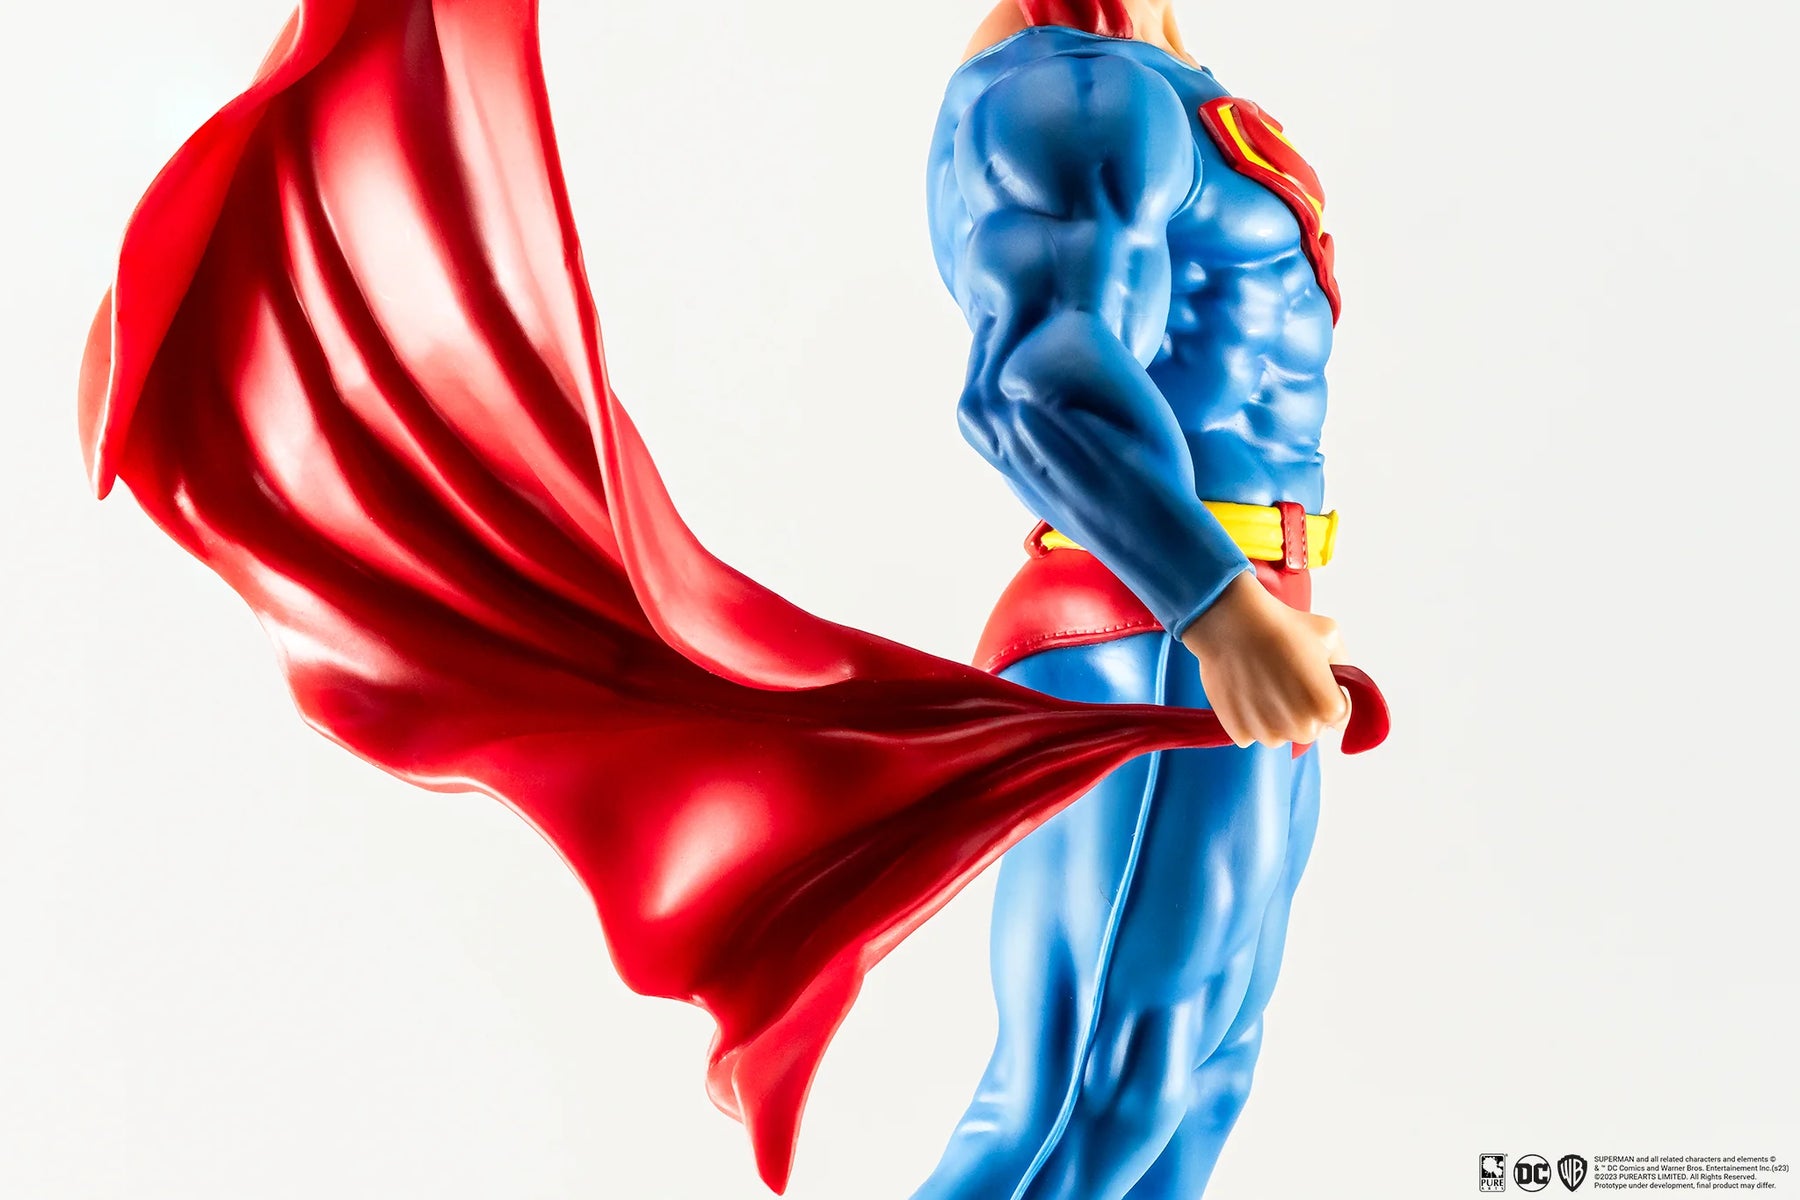 DIAMOND SELECT - DC Heroes - Superman (Classic Version) 1/8 Scale Statue